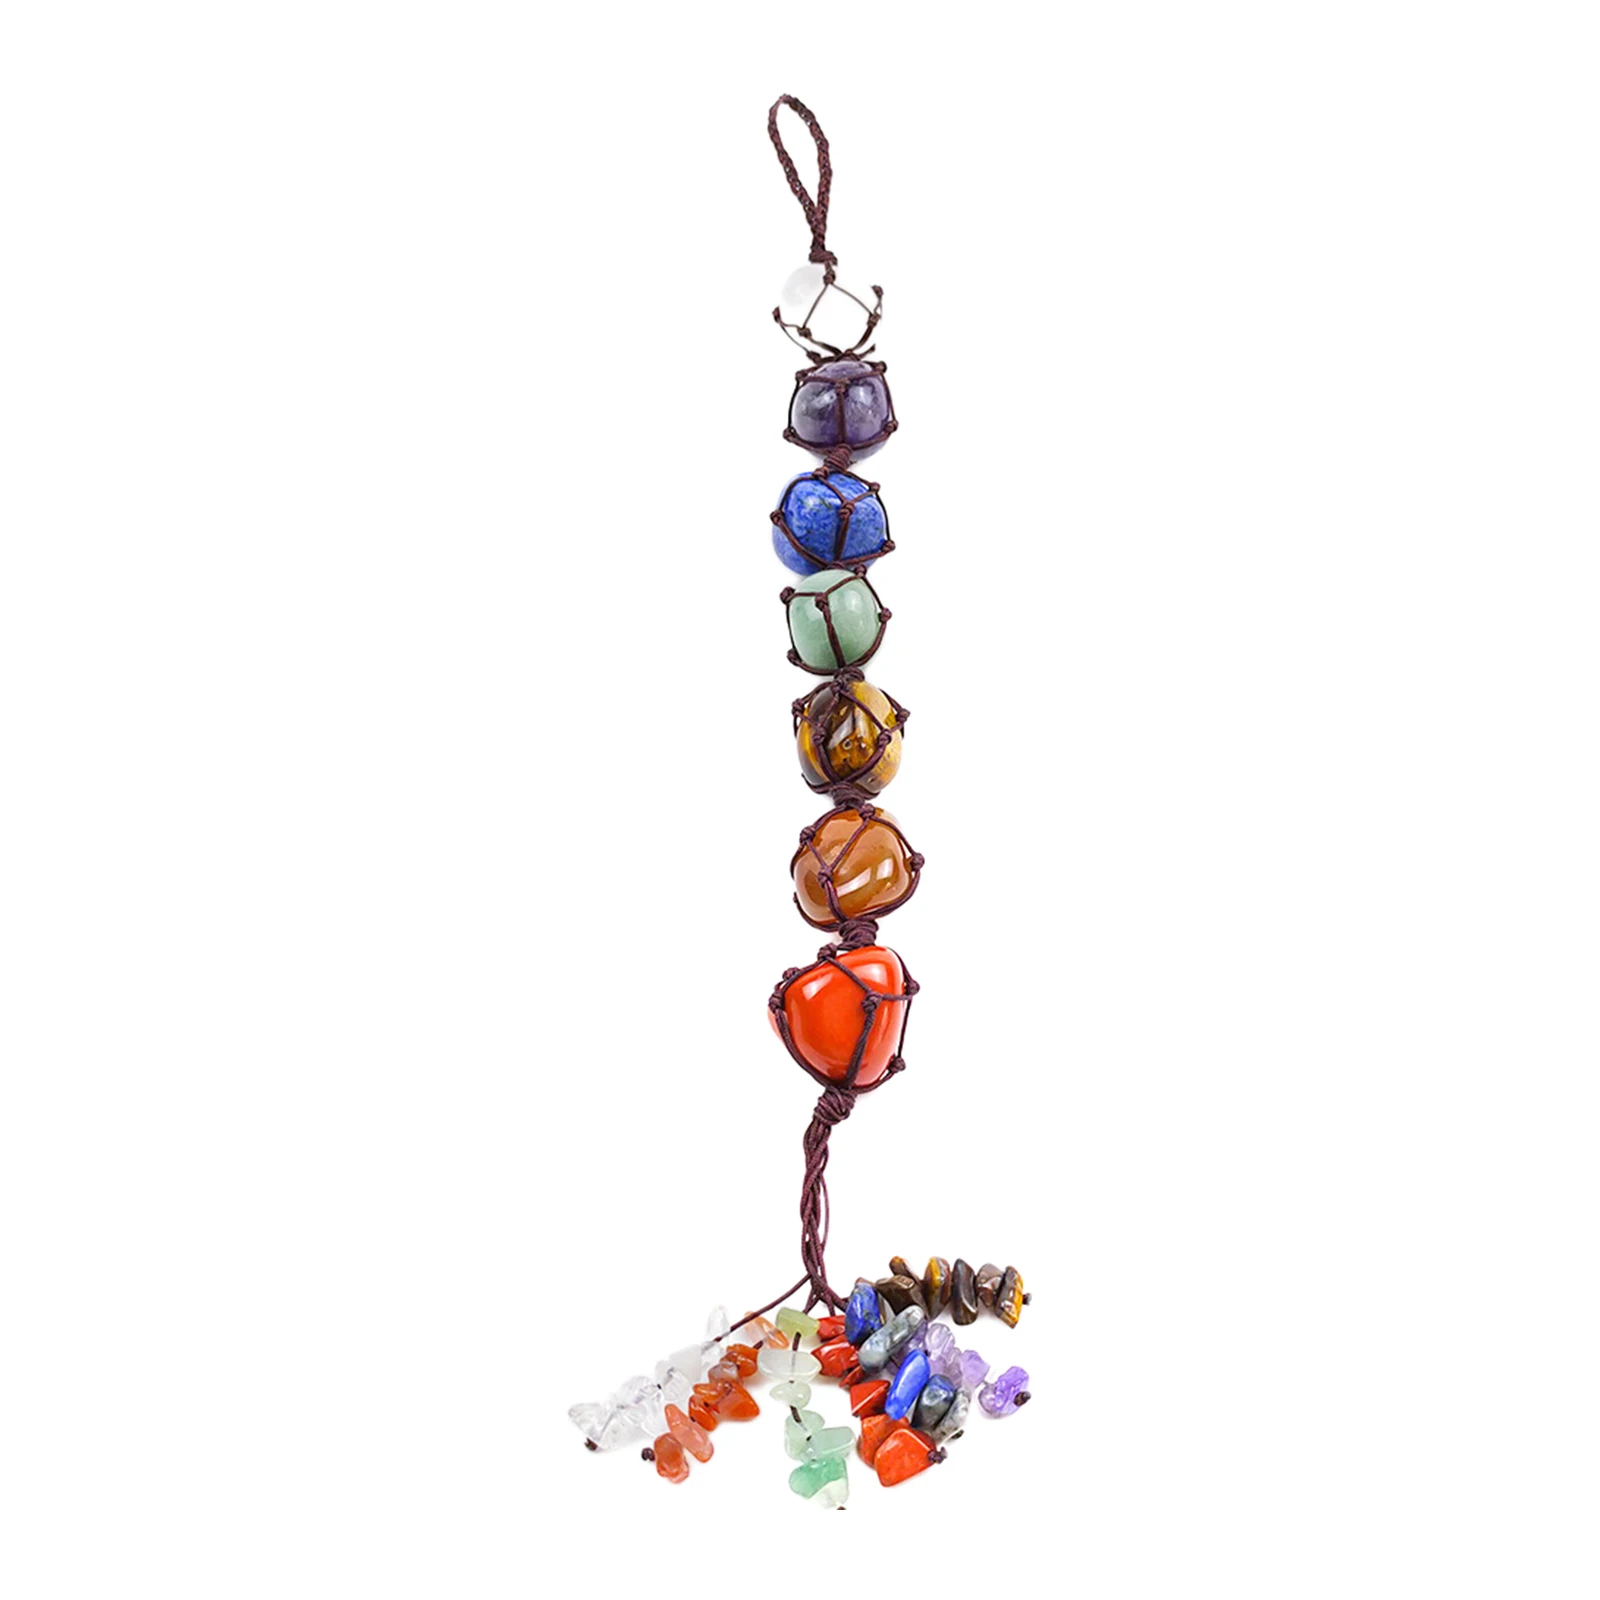 Meditation Reiki Heal Crystals Pendant Colorful 7 Chakra Hanging Decoration Wall Art Natural Stones Christmas Decor Ornament